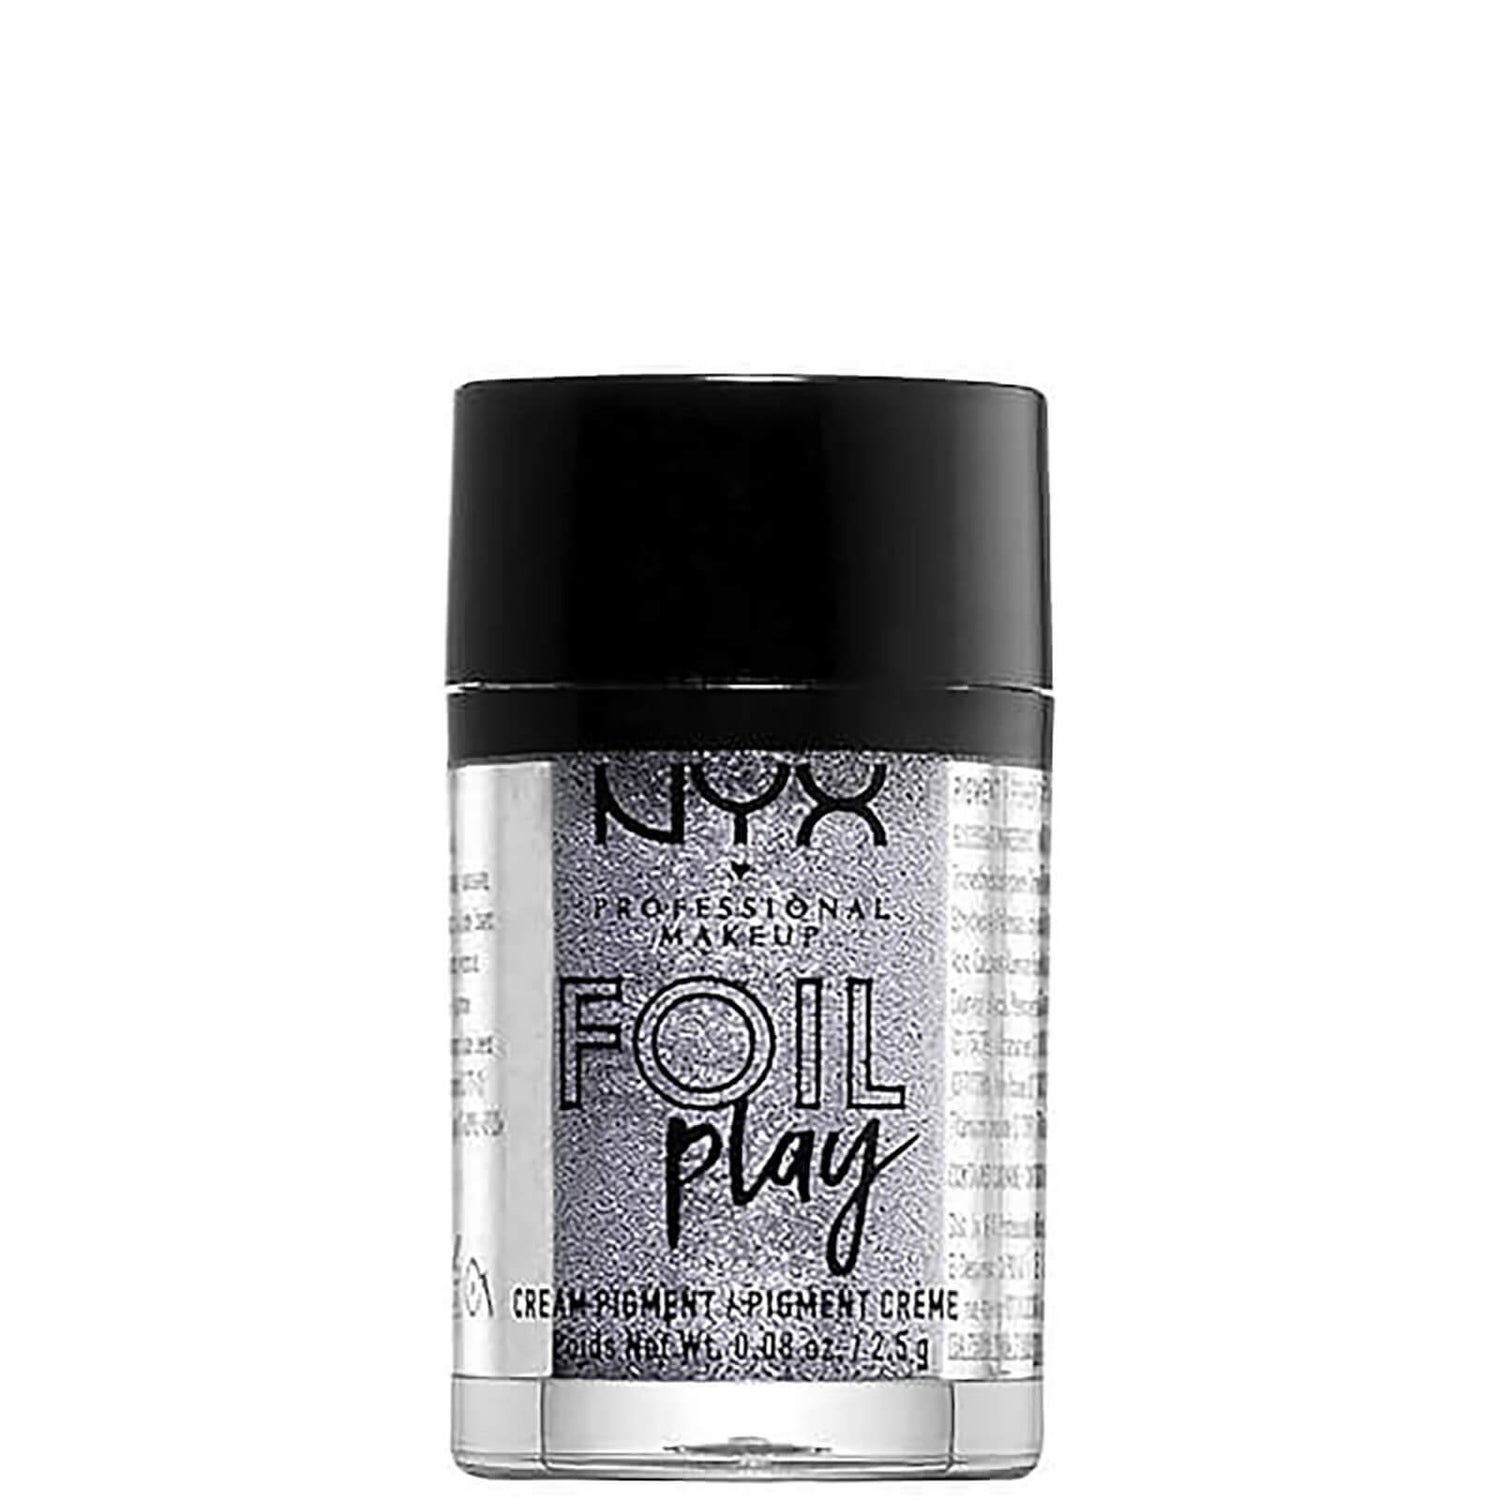 NYX Professional Makeup Foil Play pigmento in crema (varie tonalità)